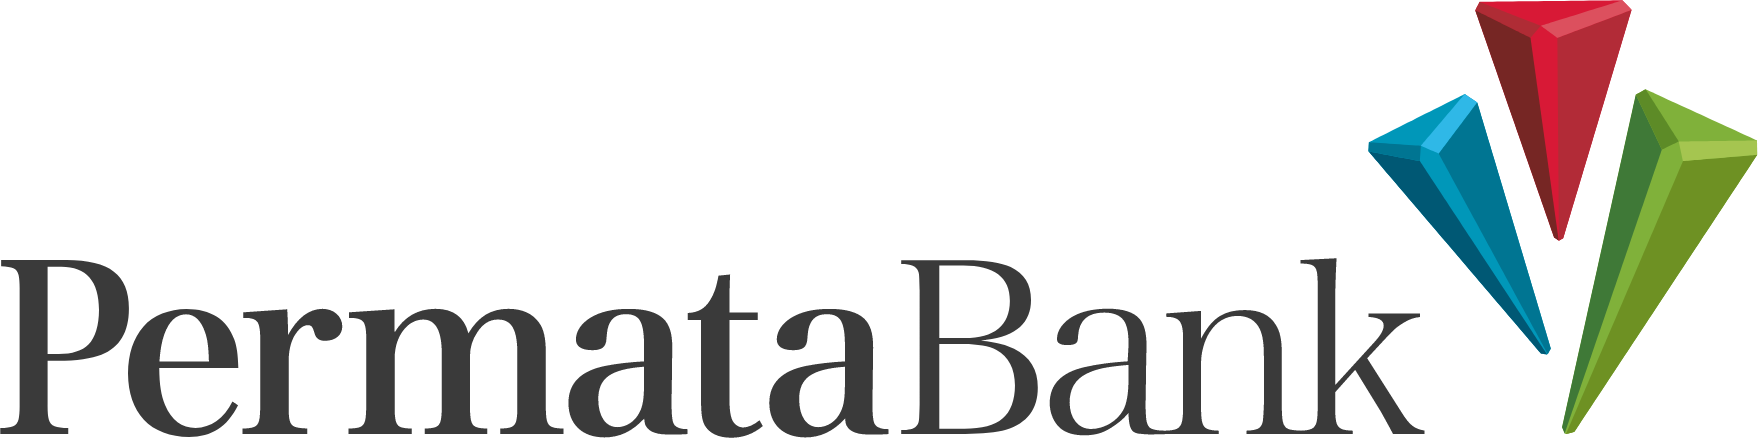 Permata Bank logo large (transparent PNG)